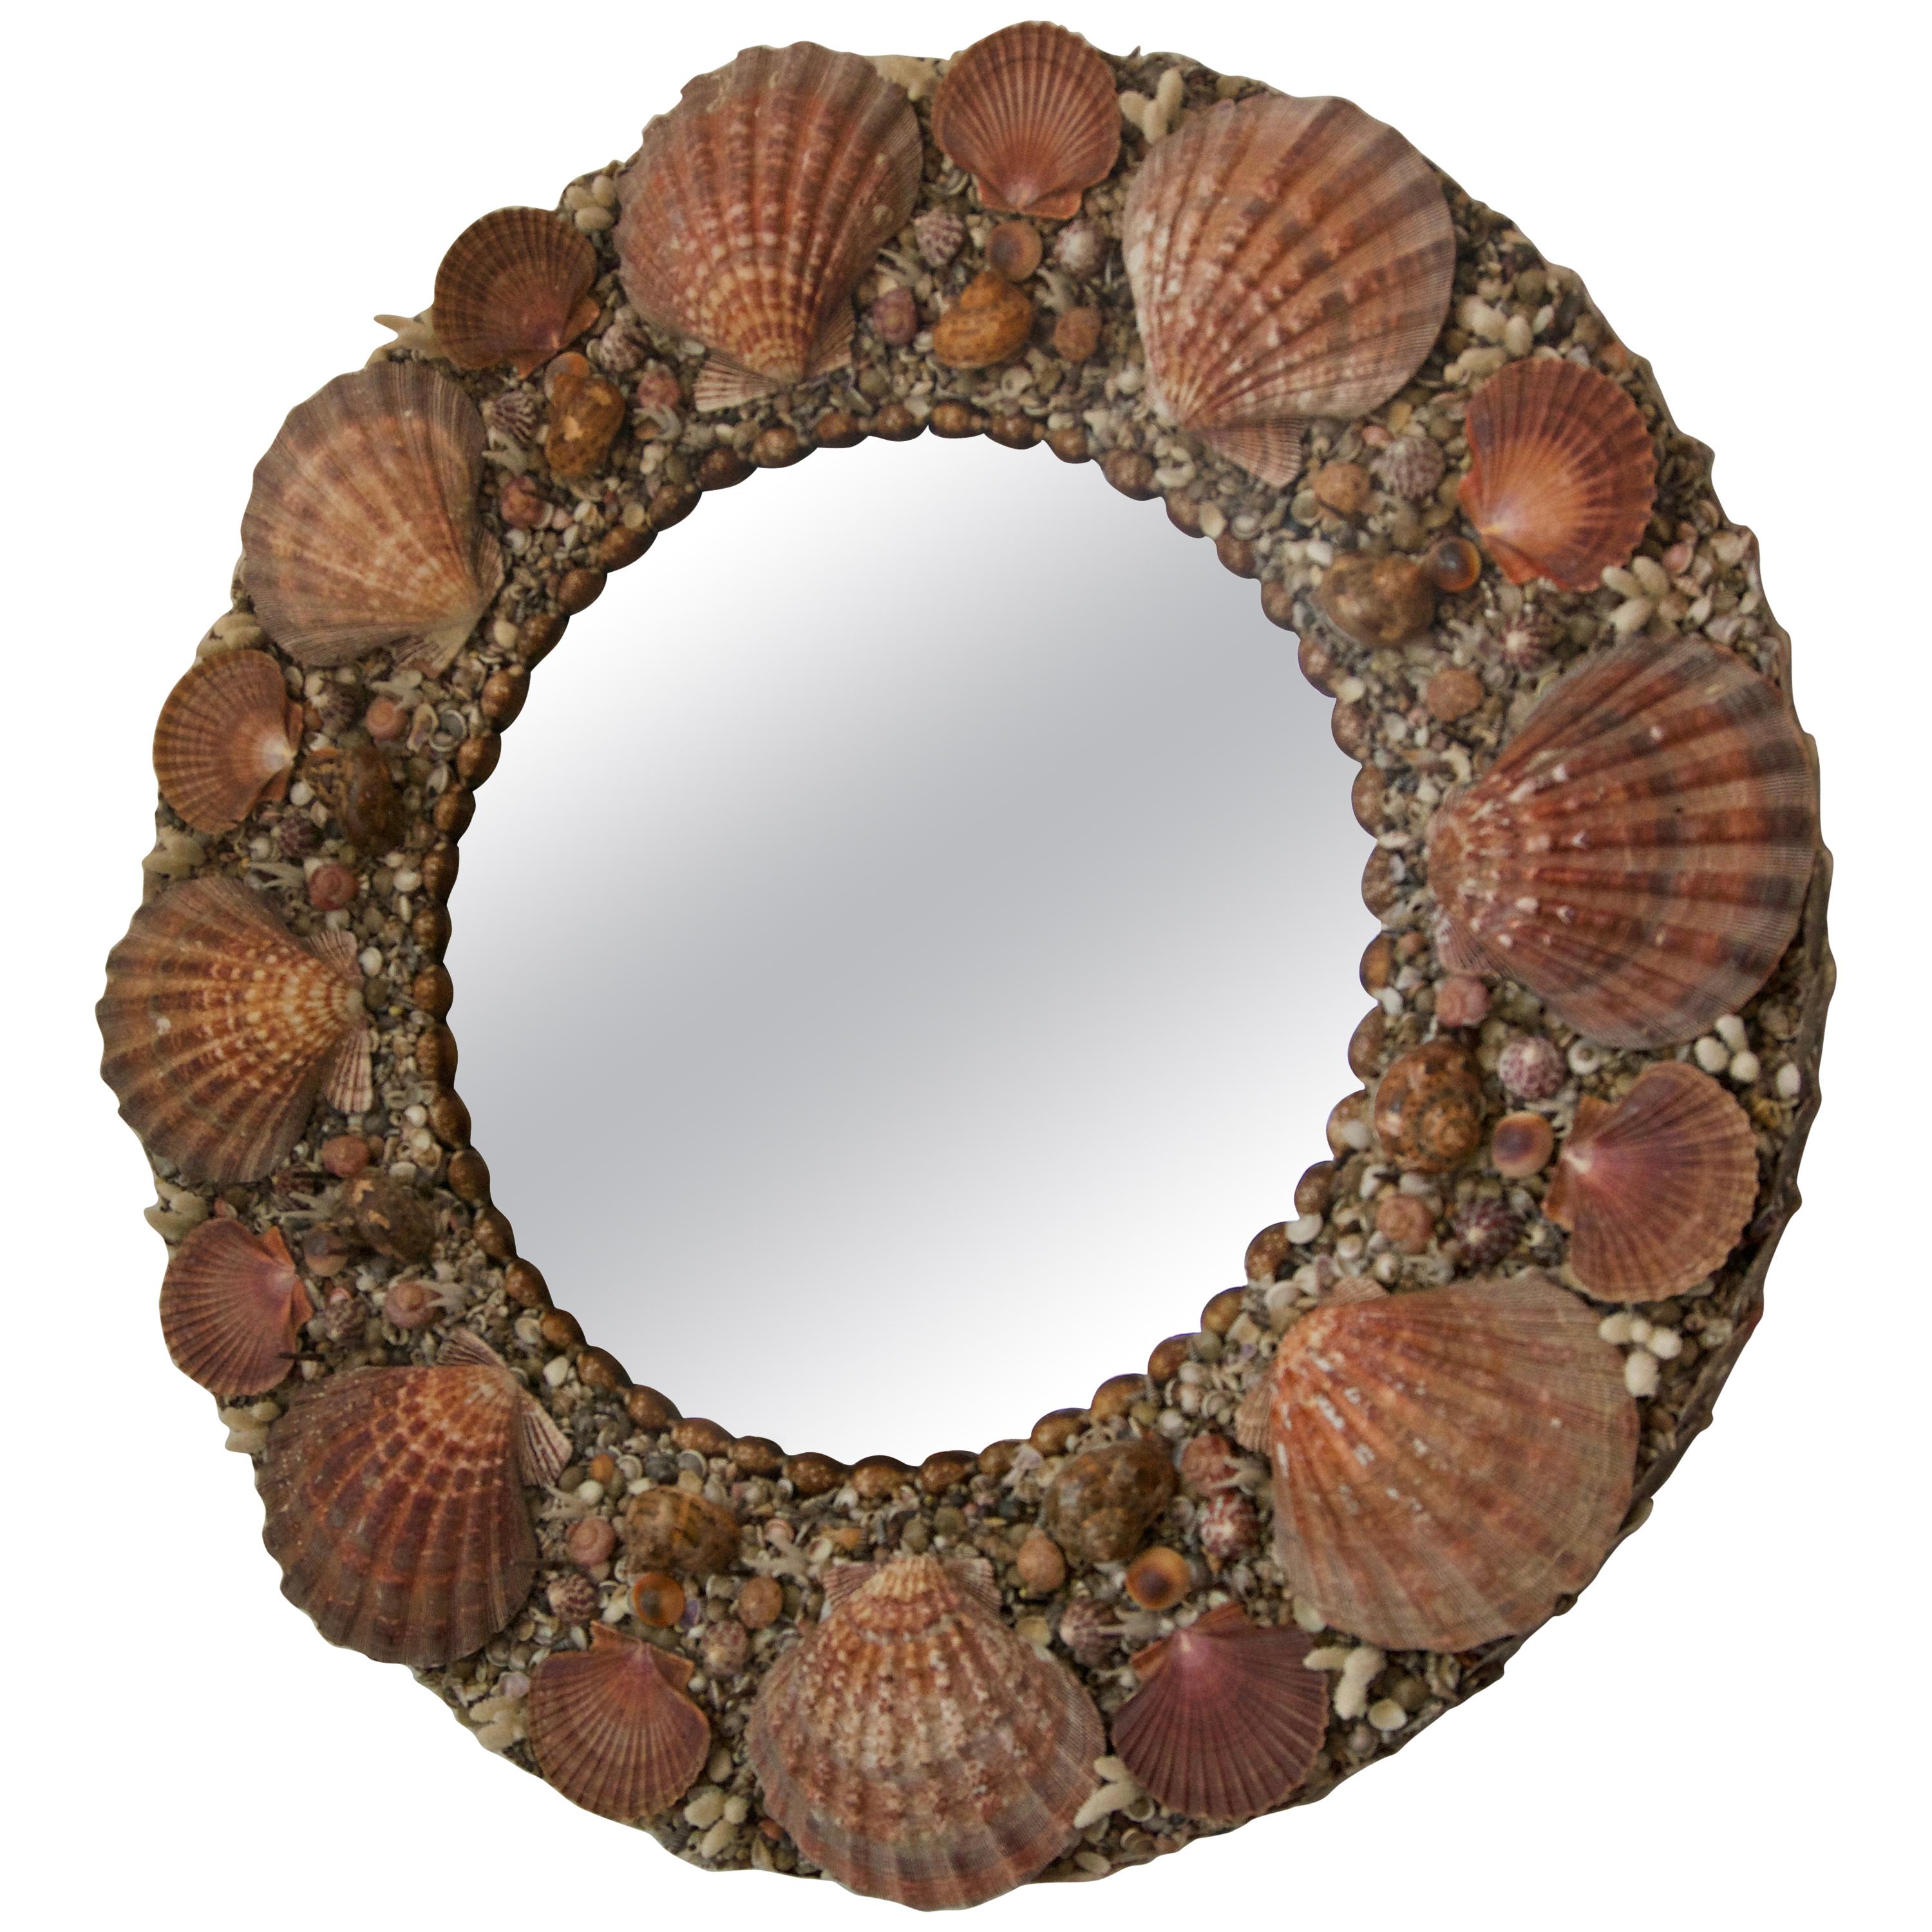 Round Seashell Encrusted Wall Mirror